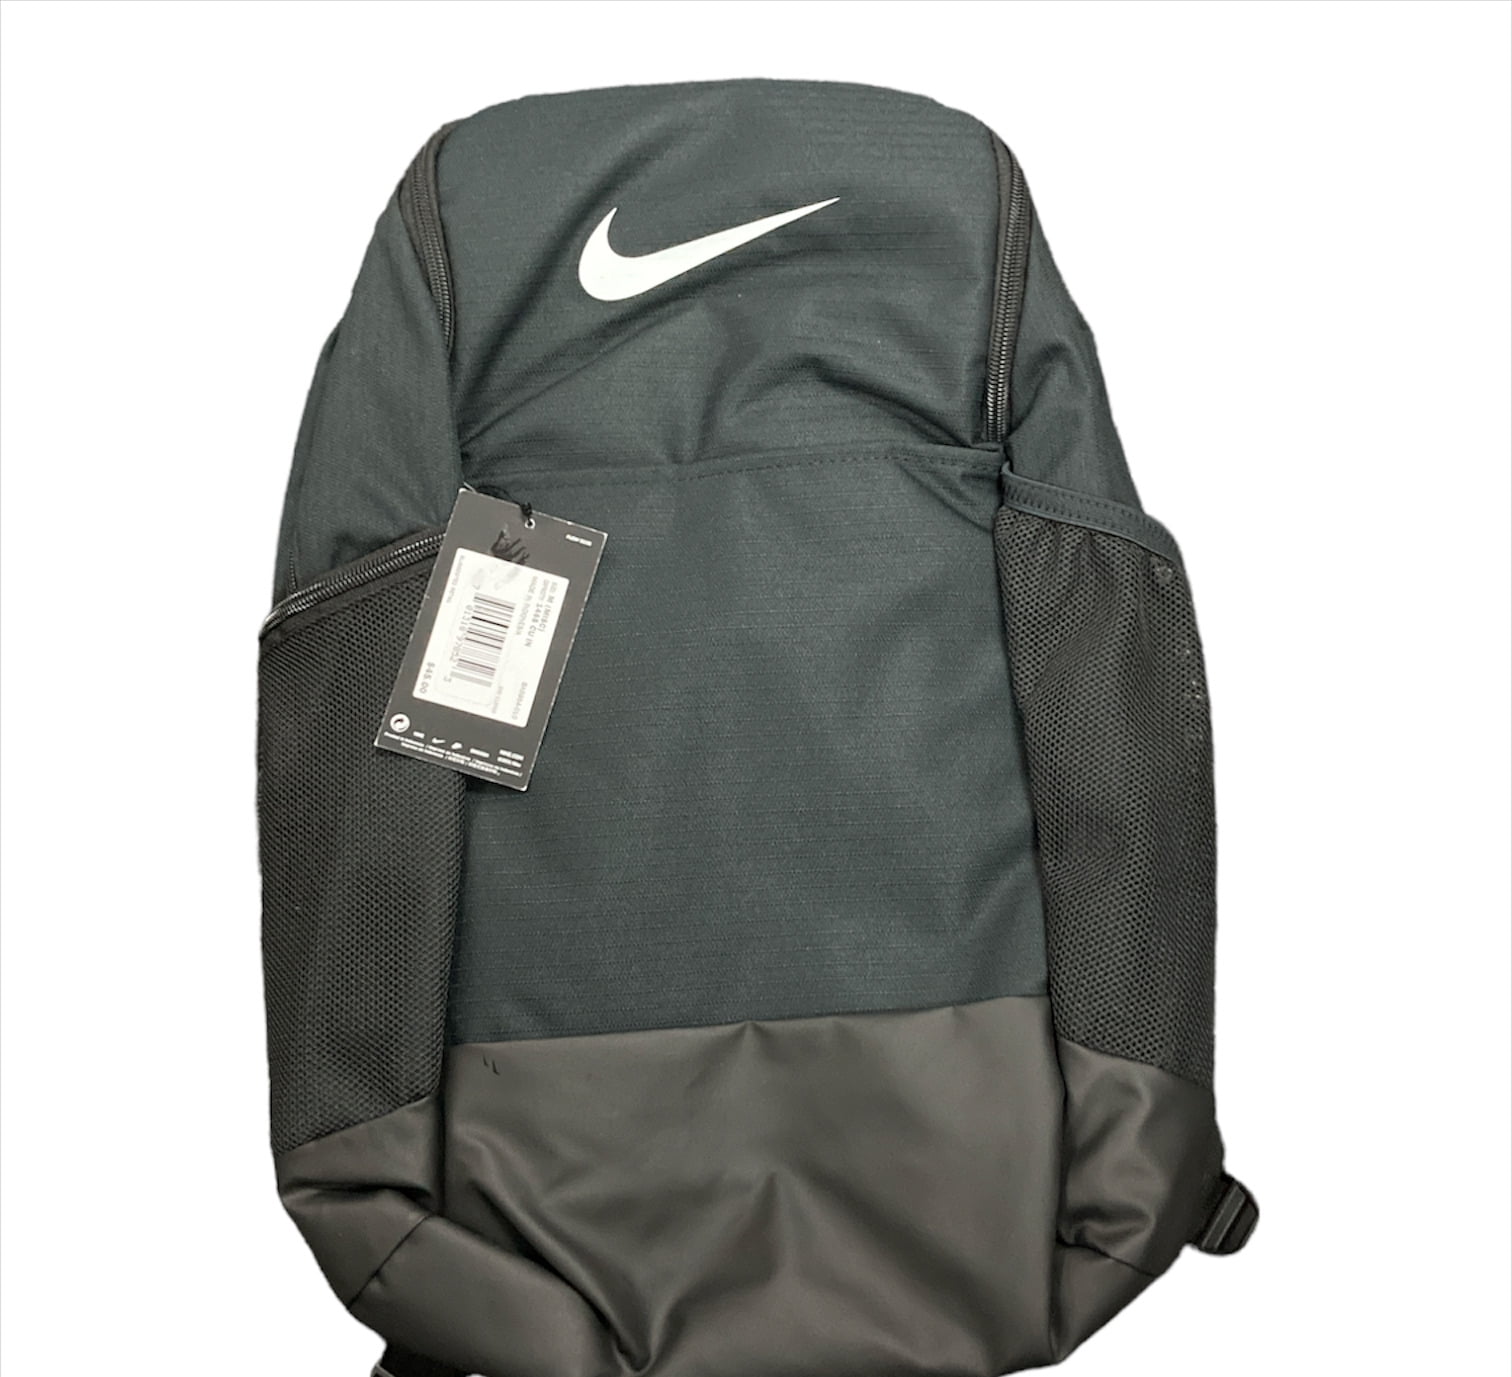 Nike Brasilia Medium Training Backpack Water Resistant Coating, Black/White